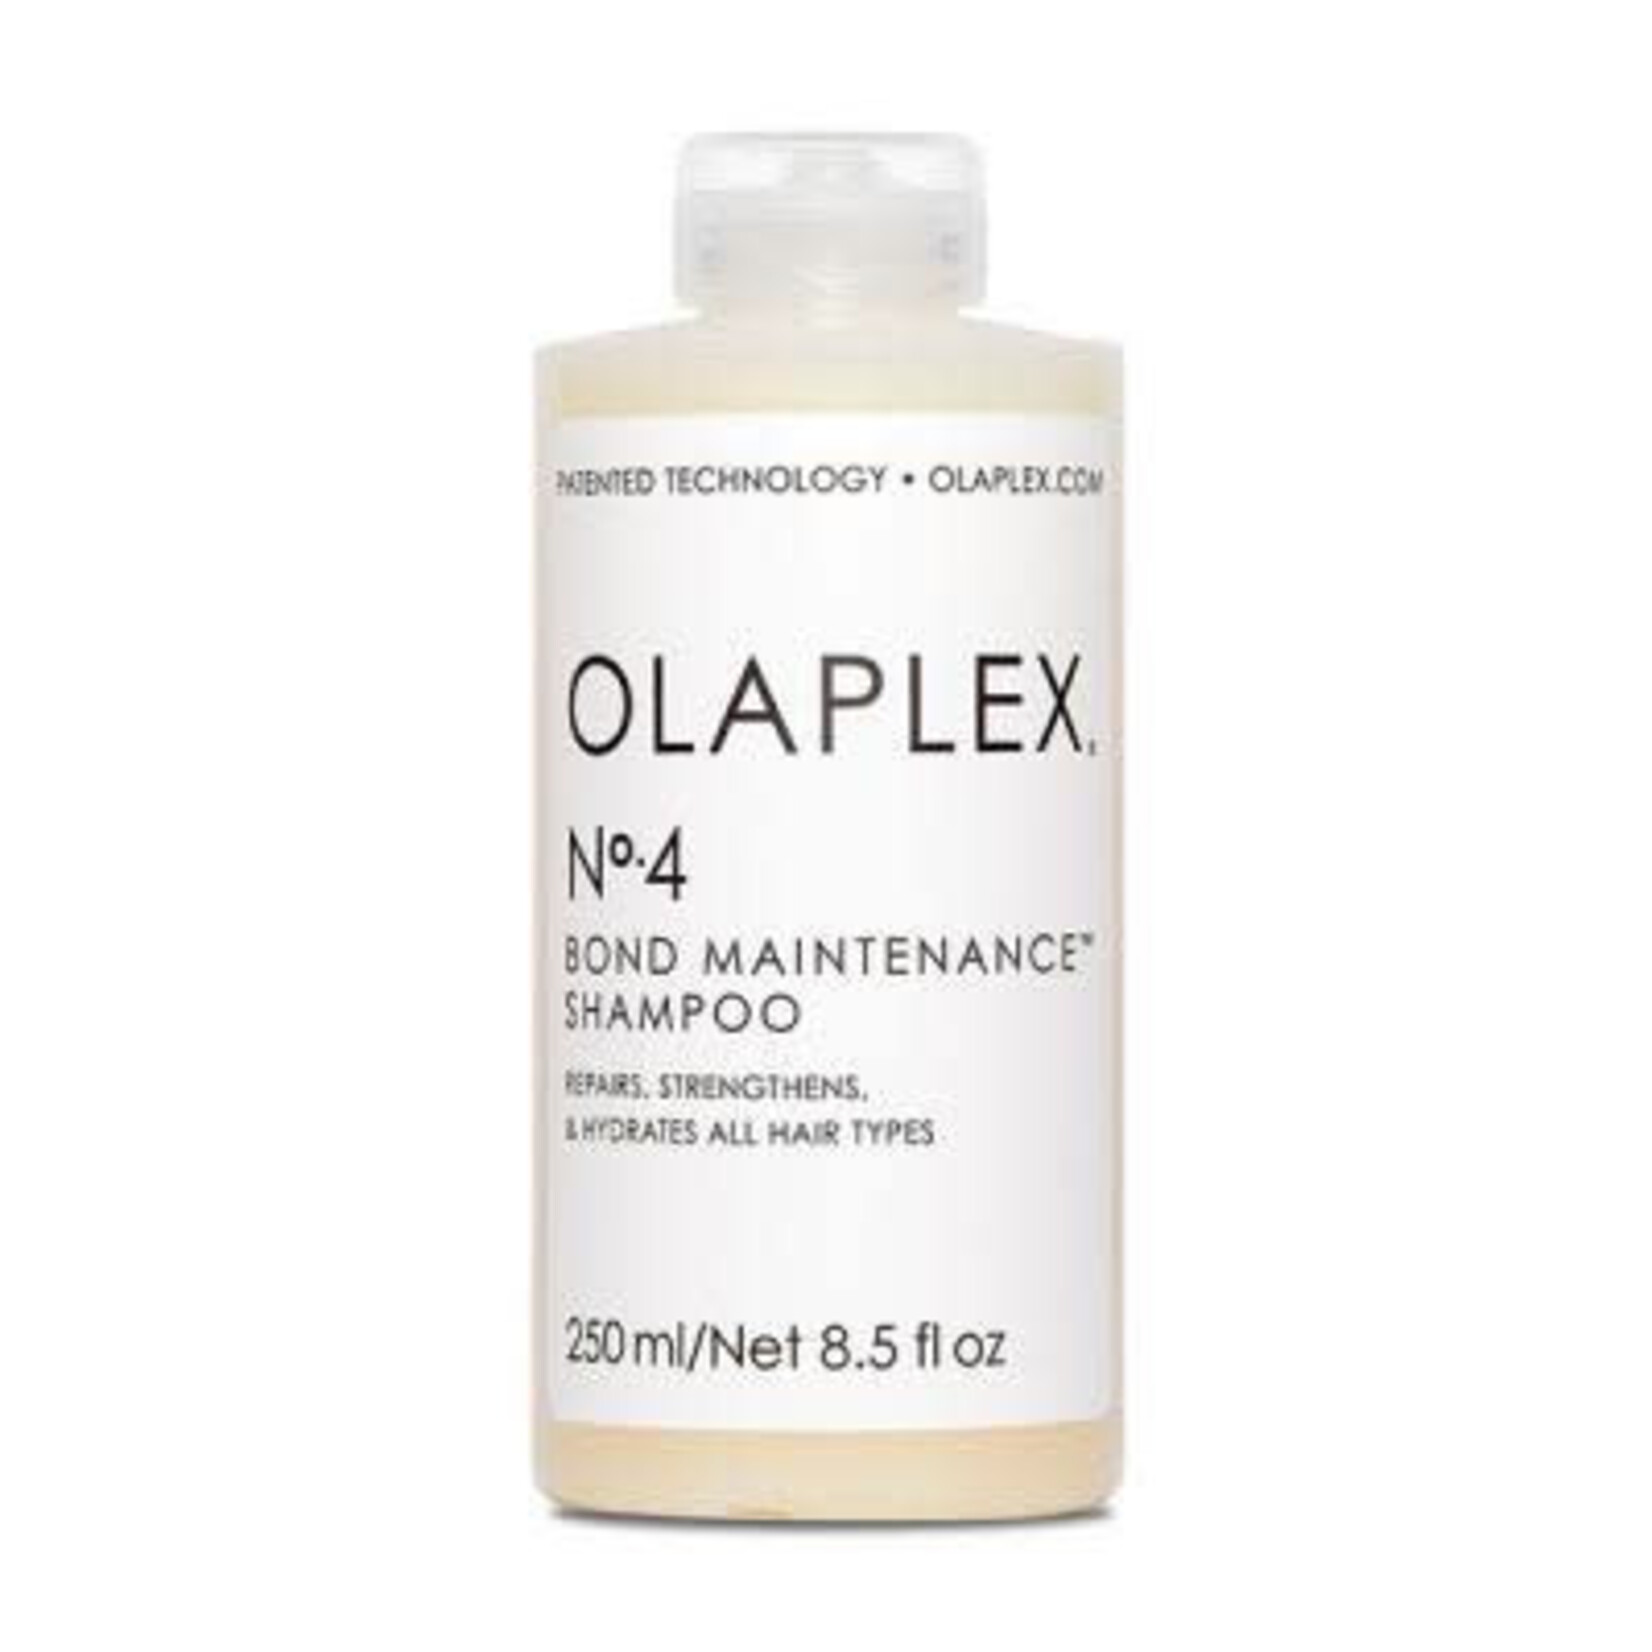 Olaplex Olaplex - No.4 Shampooing Bond Maintenance 250ml